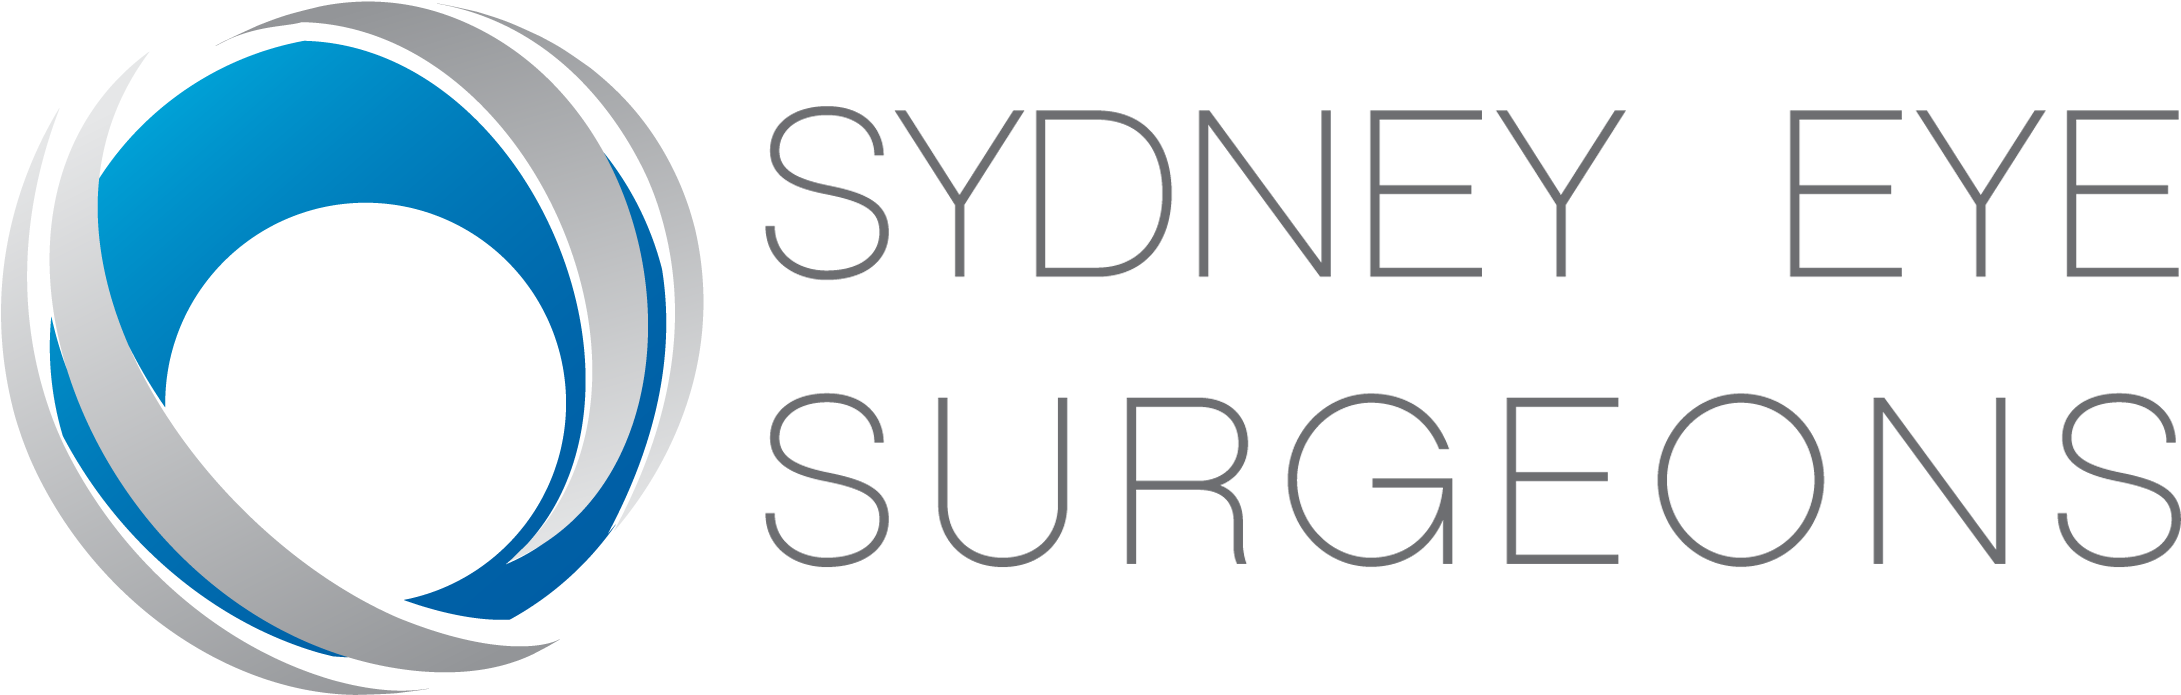 Sydney Eye Surgeons Logo PNG